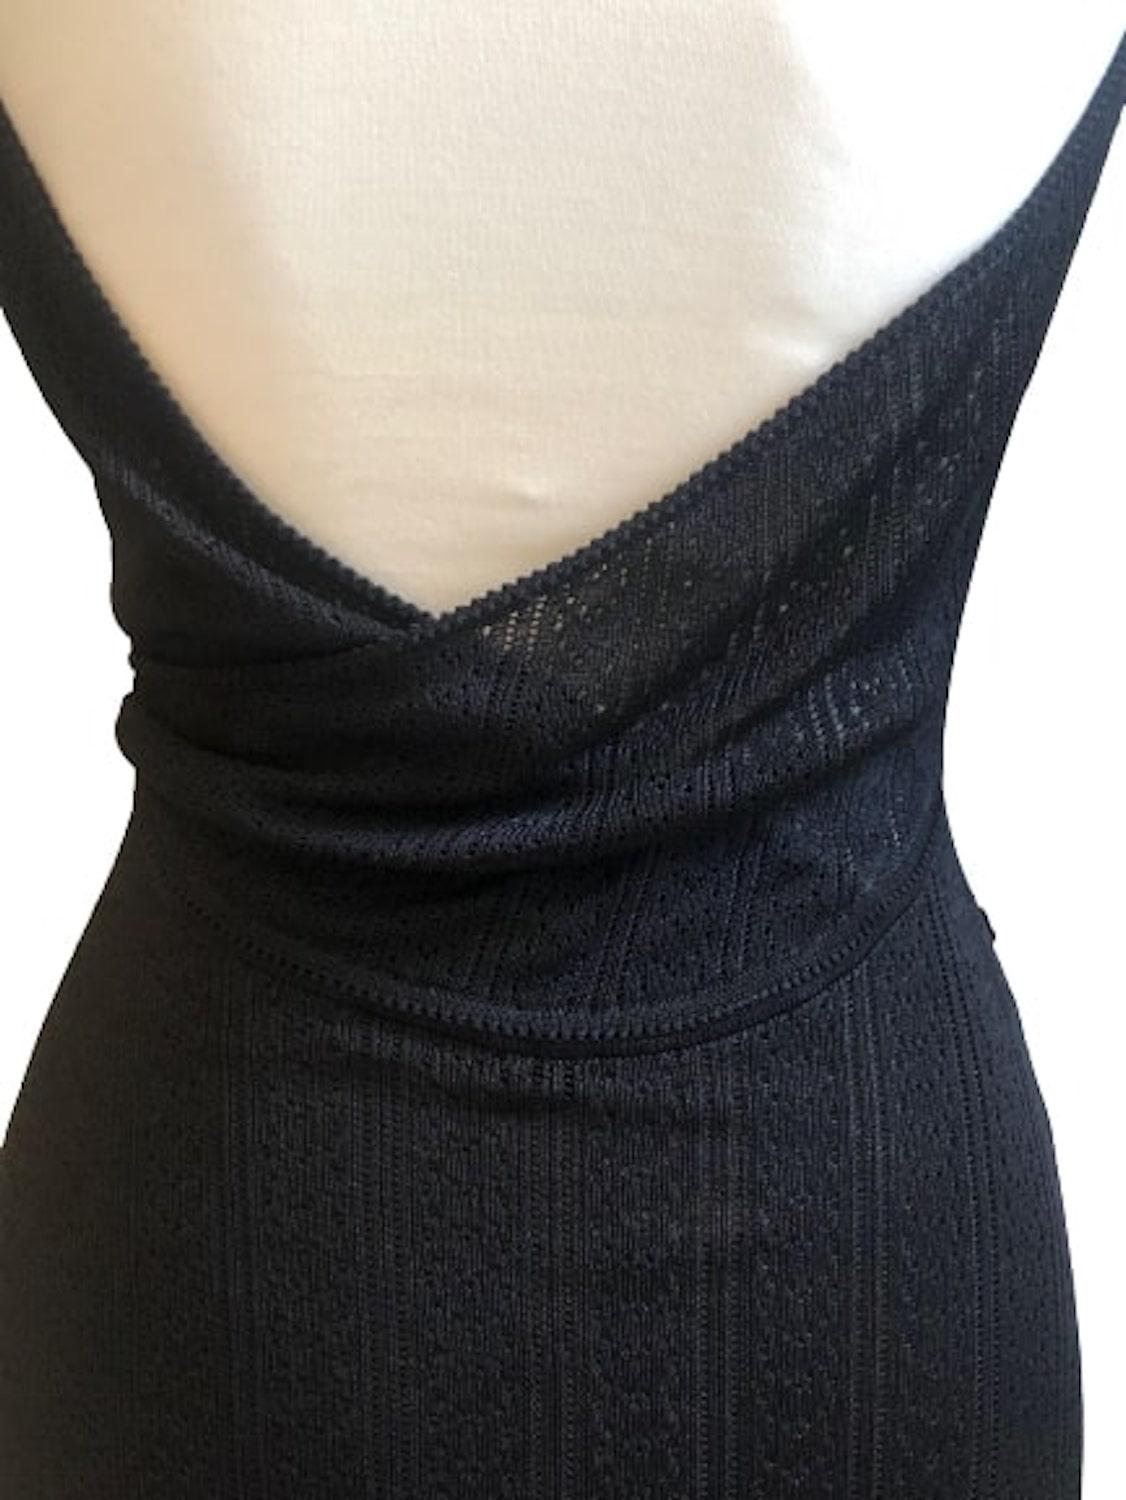 JOHN GALLIANO - Robe de soirée en dentelle noire tricotée, longueur moyenne, circa 1998 en vente 1